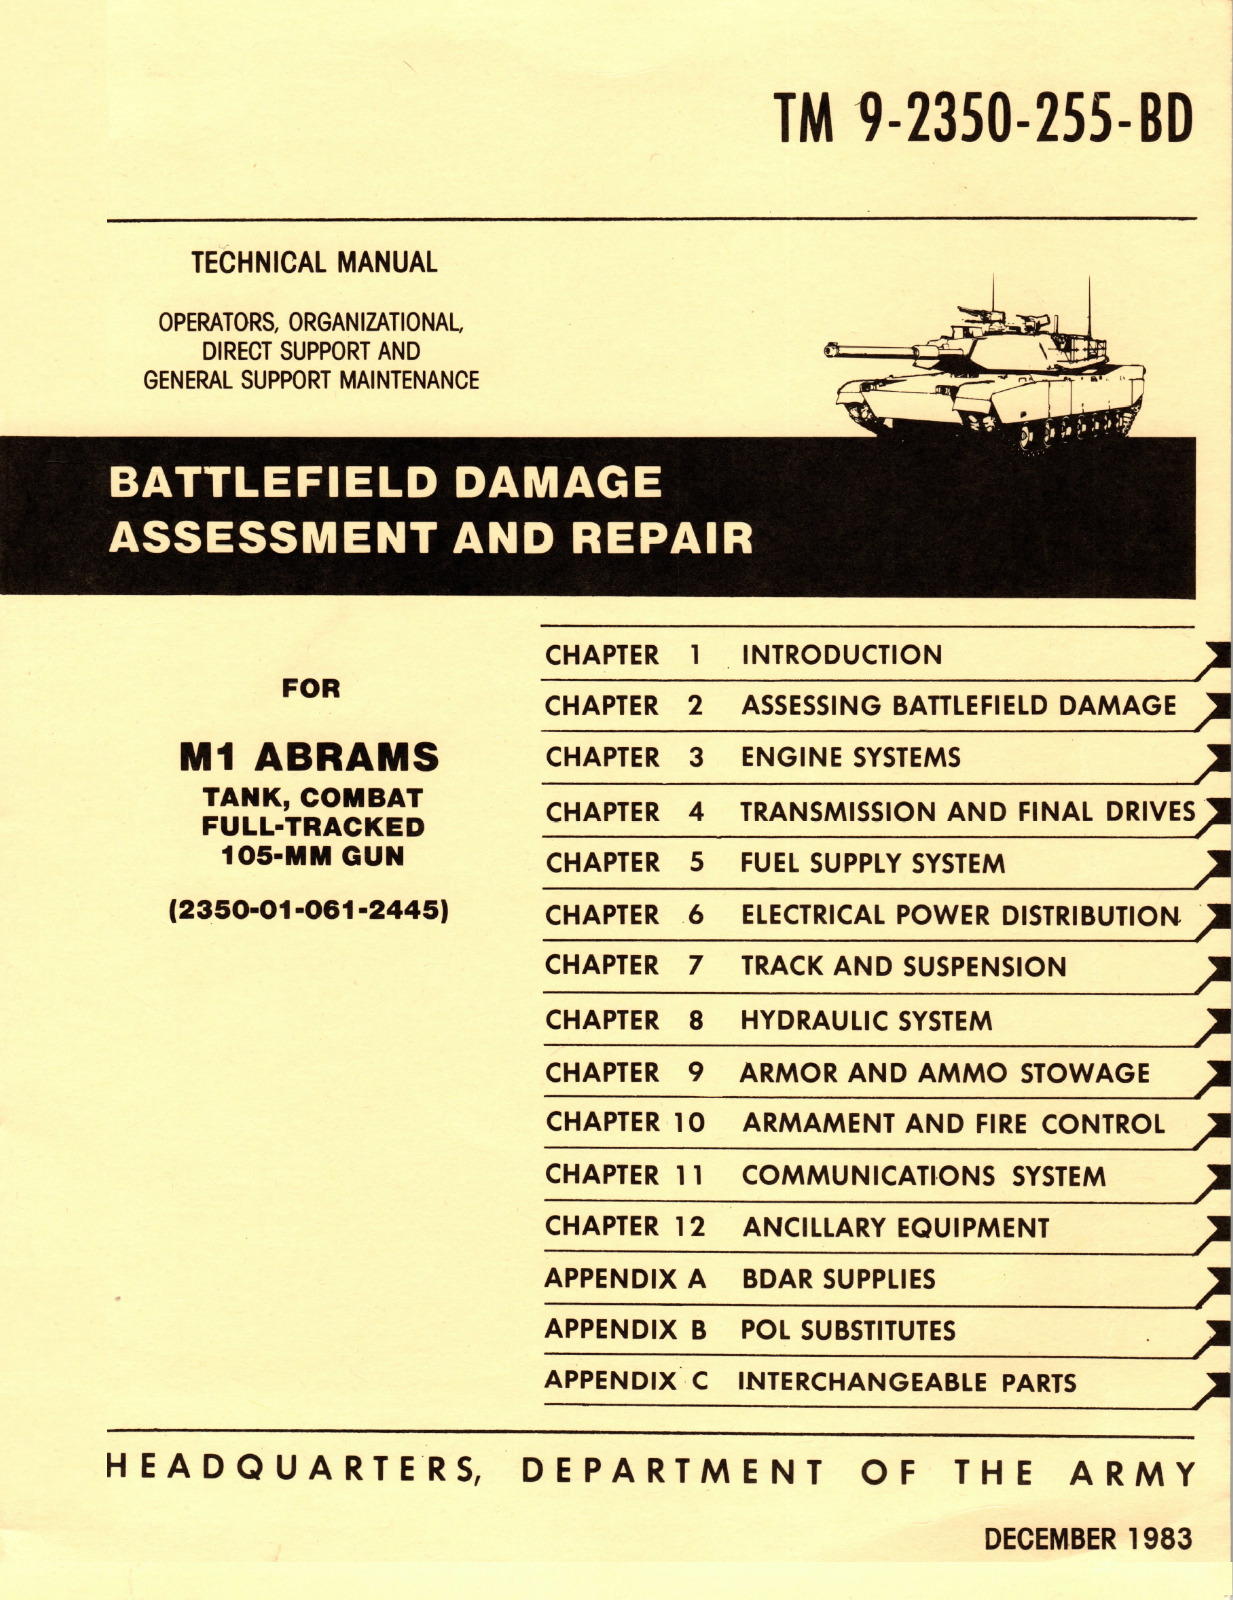 682 Page 1983 TM 9-2350-255-BD M1 ABRAMS TANK Battlefield Damage on Data CD